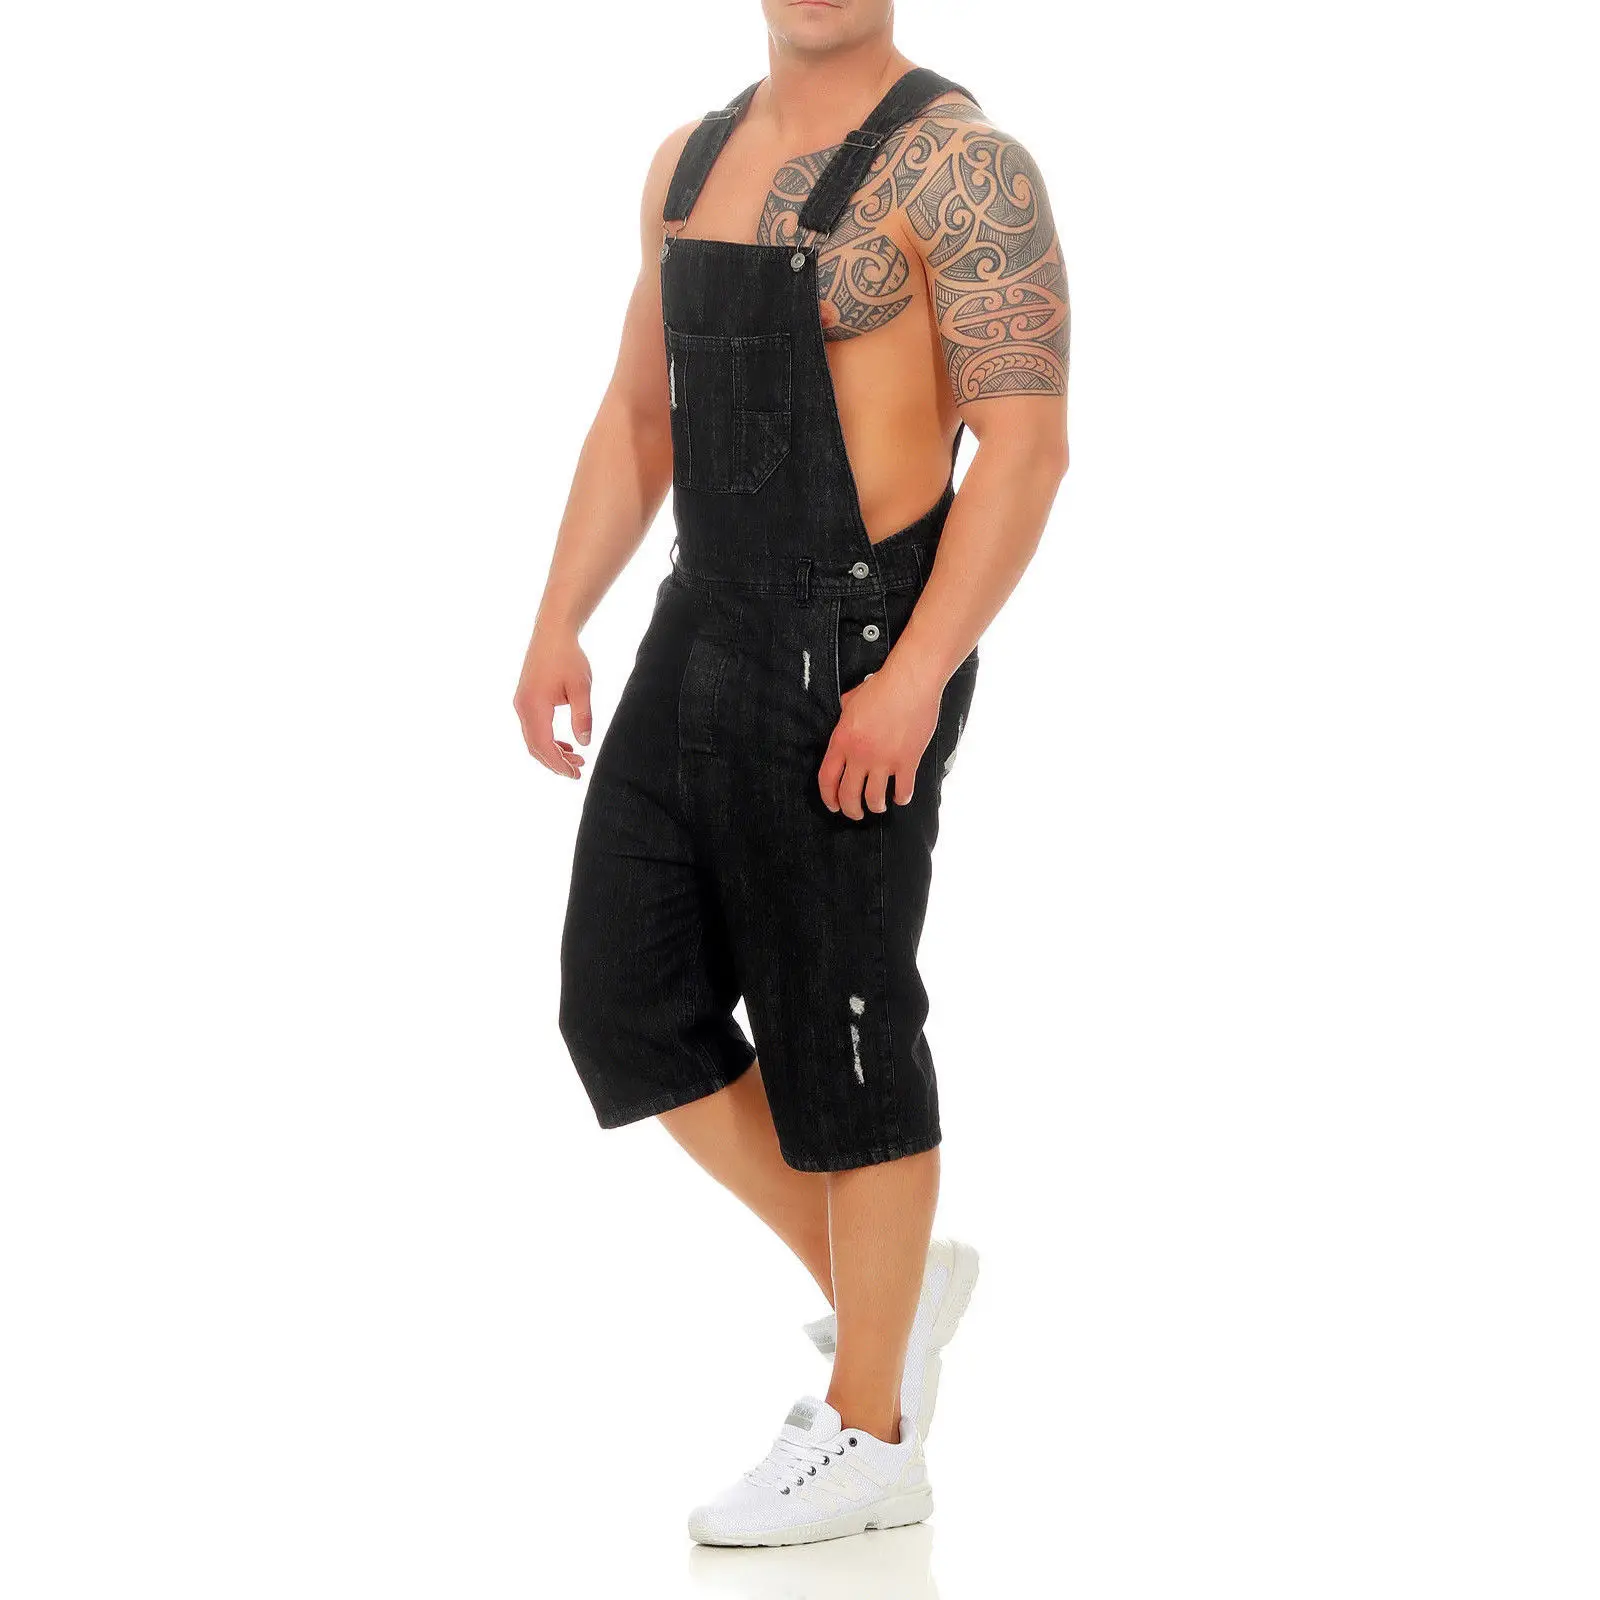 

2018 wish amazon eBay new retro men's denim hole in shorts conjoined tooling overalls